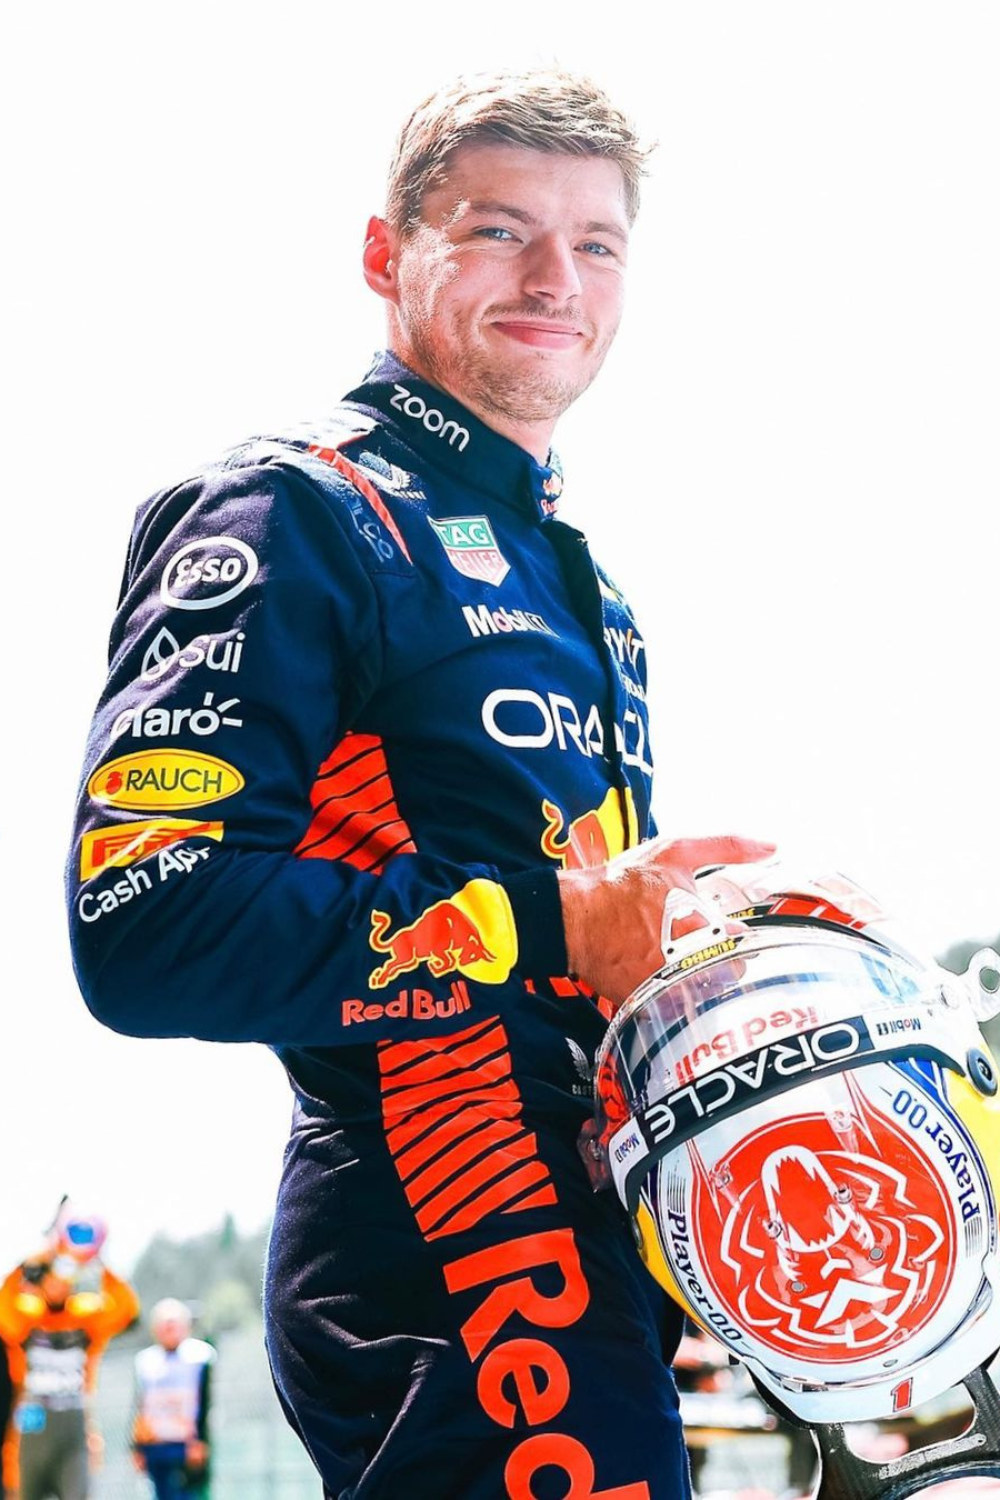 Jos Verstappen Eldest Son And The 2021 And 2022 Formula One World Champion, Max Verstappen